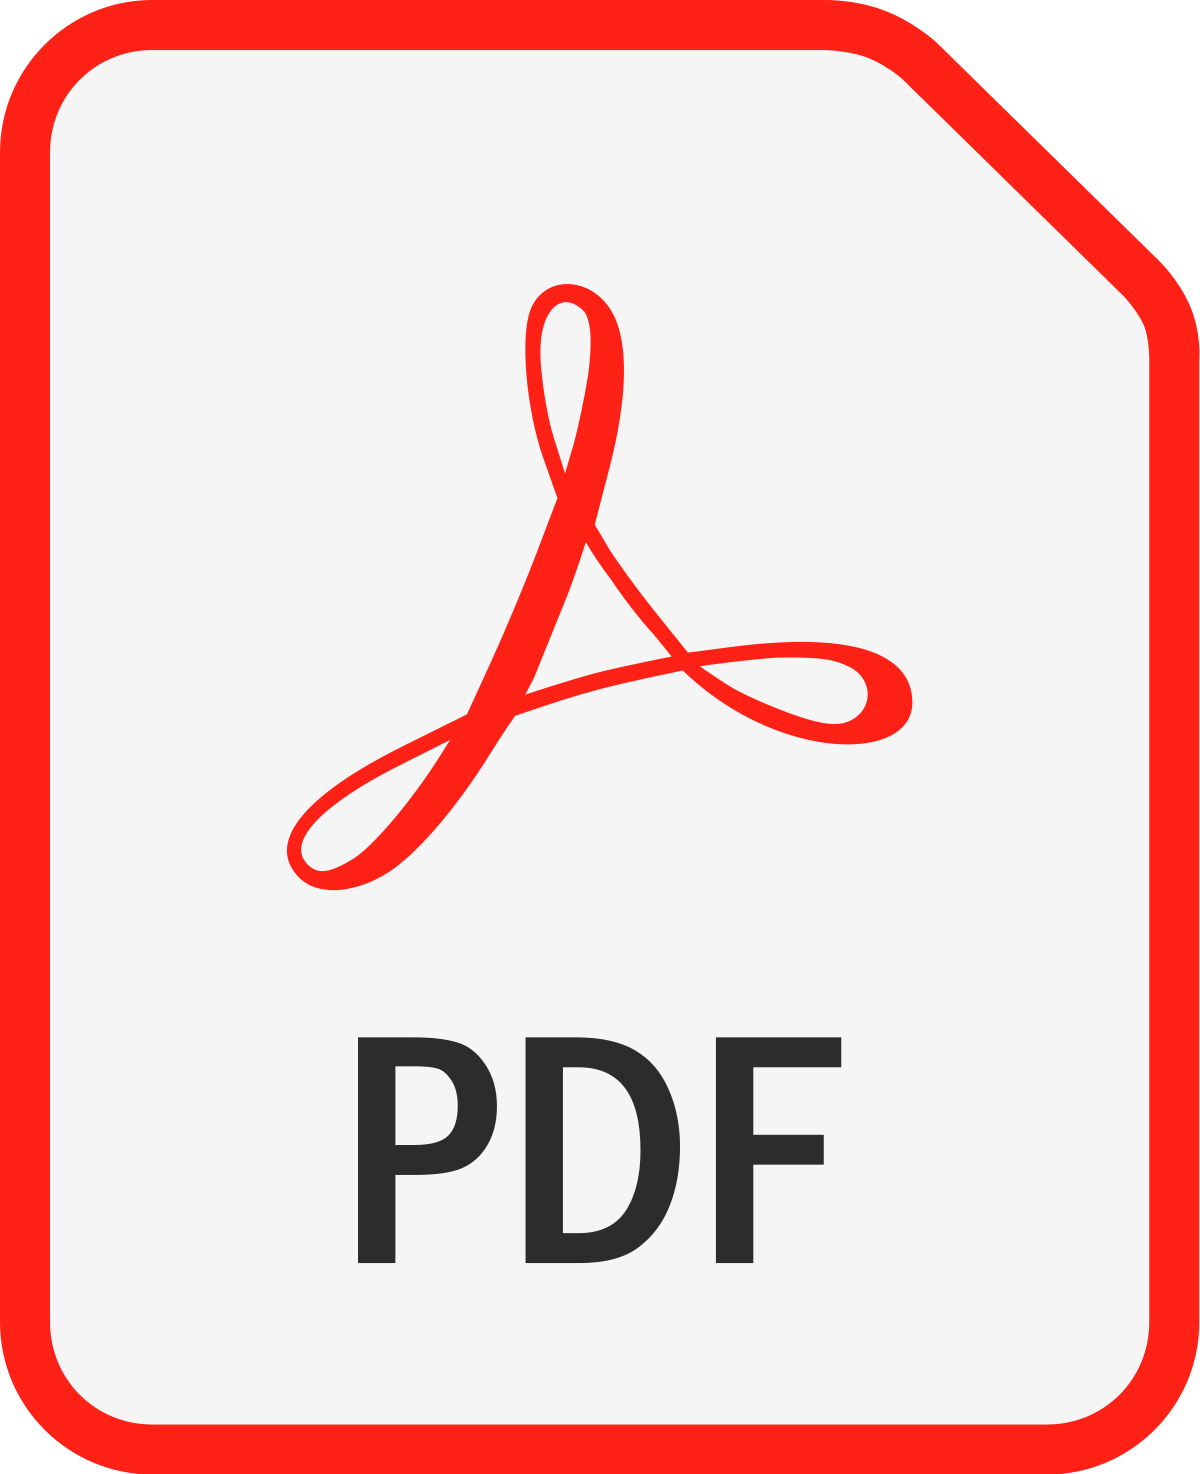 JPG file icon